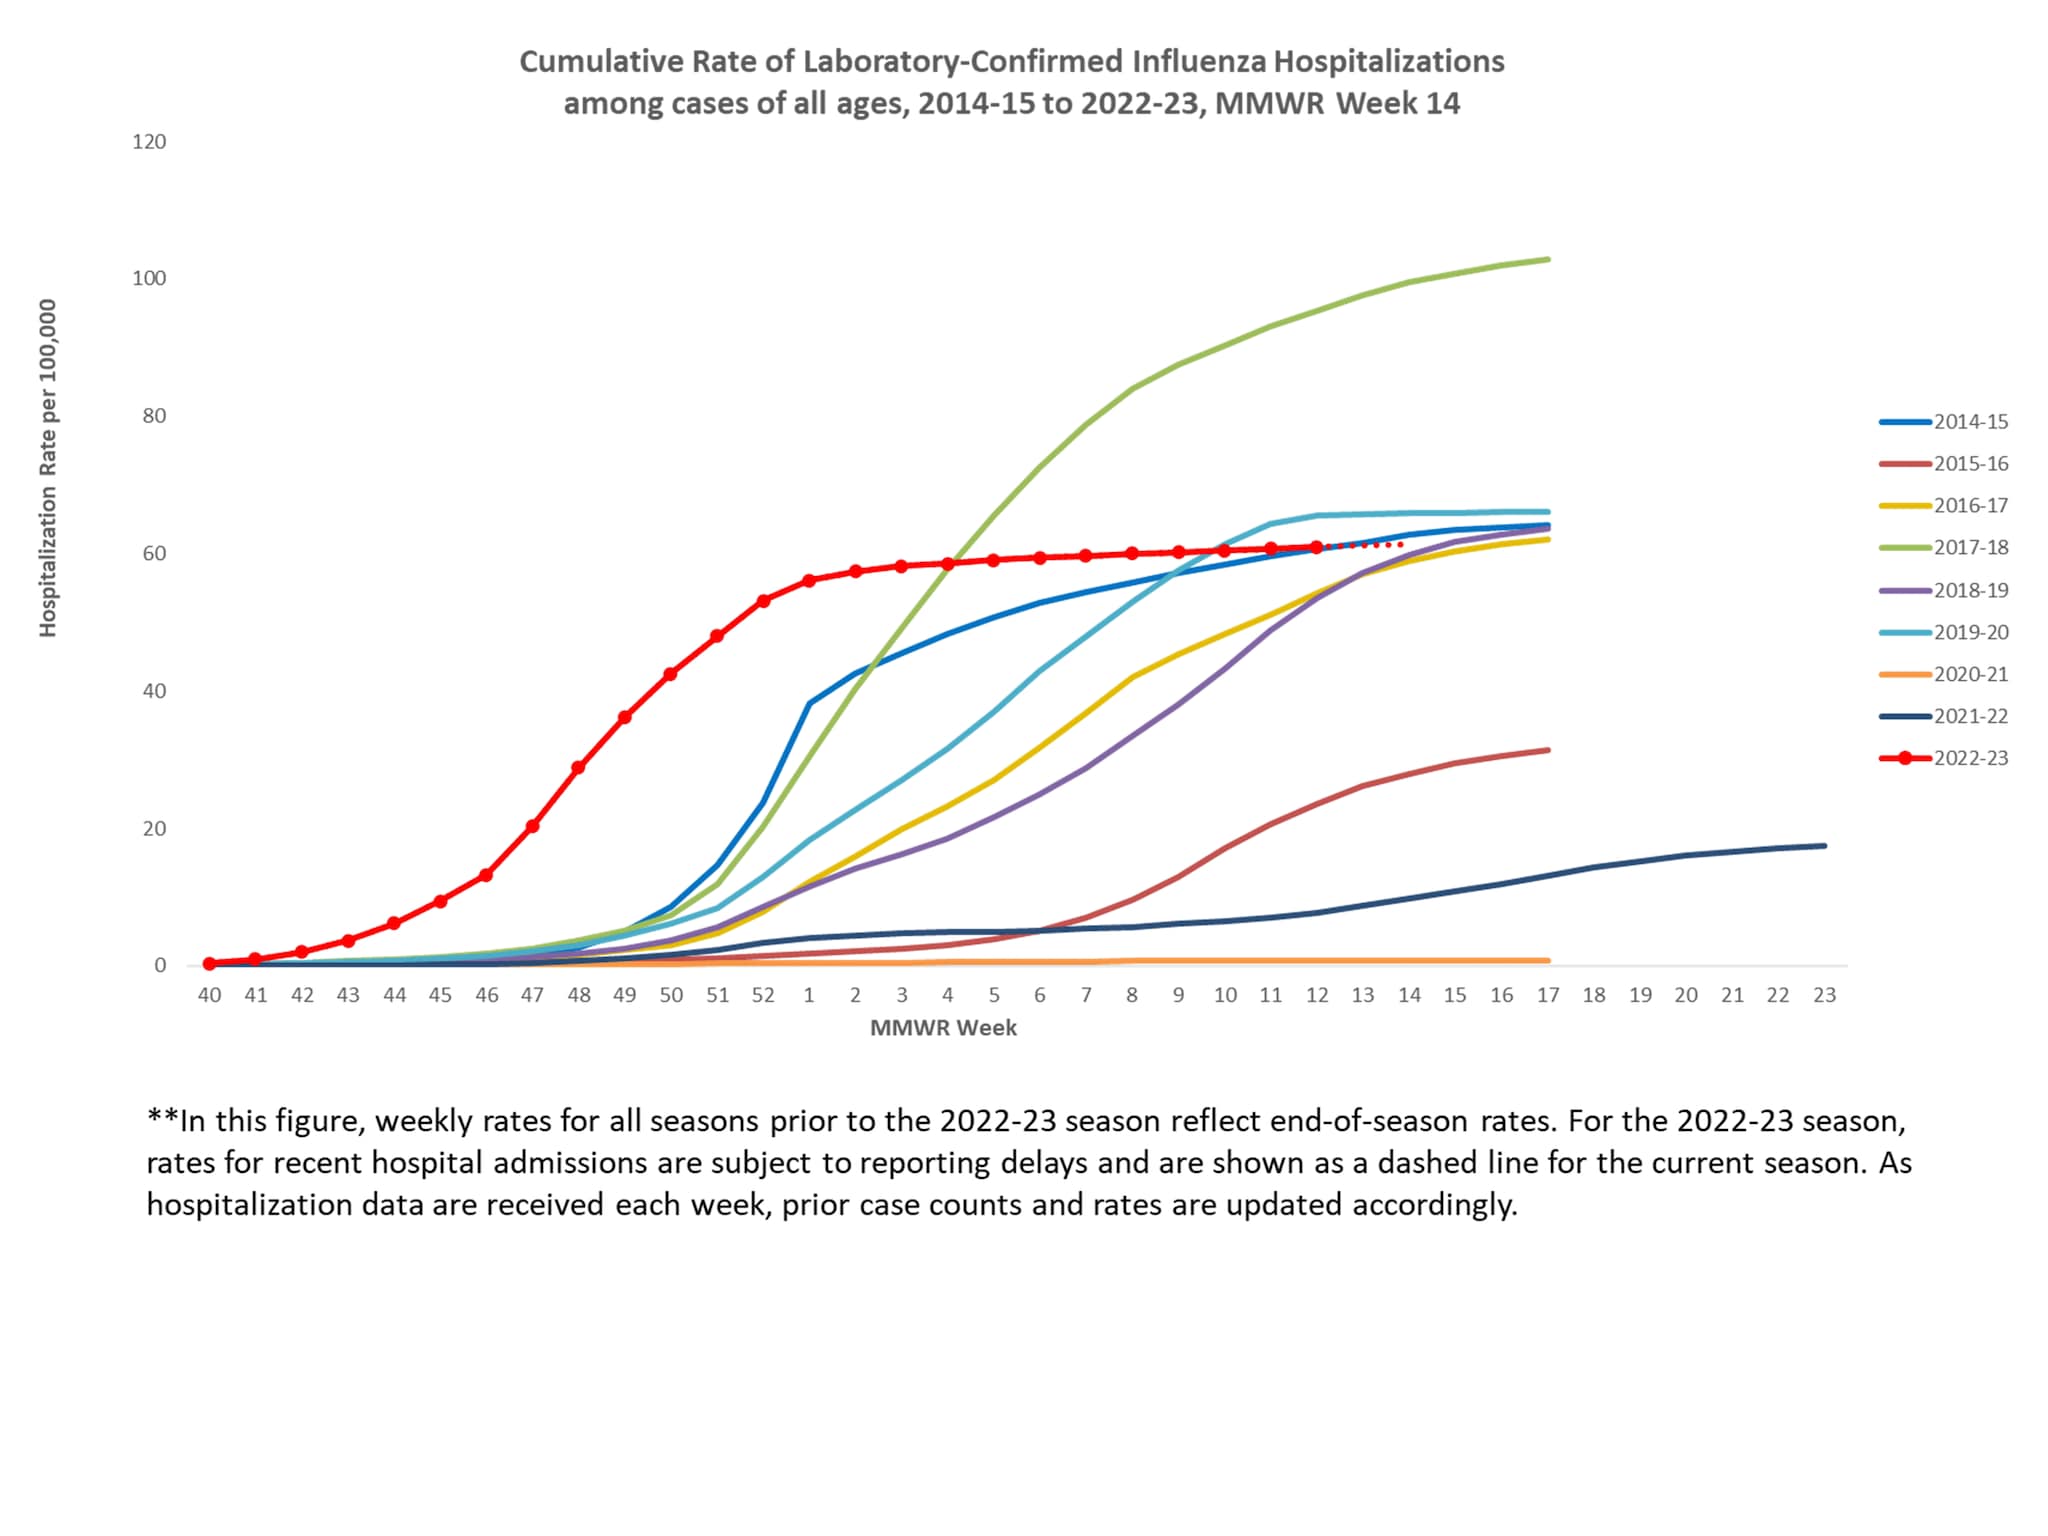 FluSurv-Net Laboratory Confirmed Cumulative Hospitalization Rates (per 100,000), Season 2022-23 Season